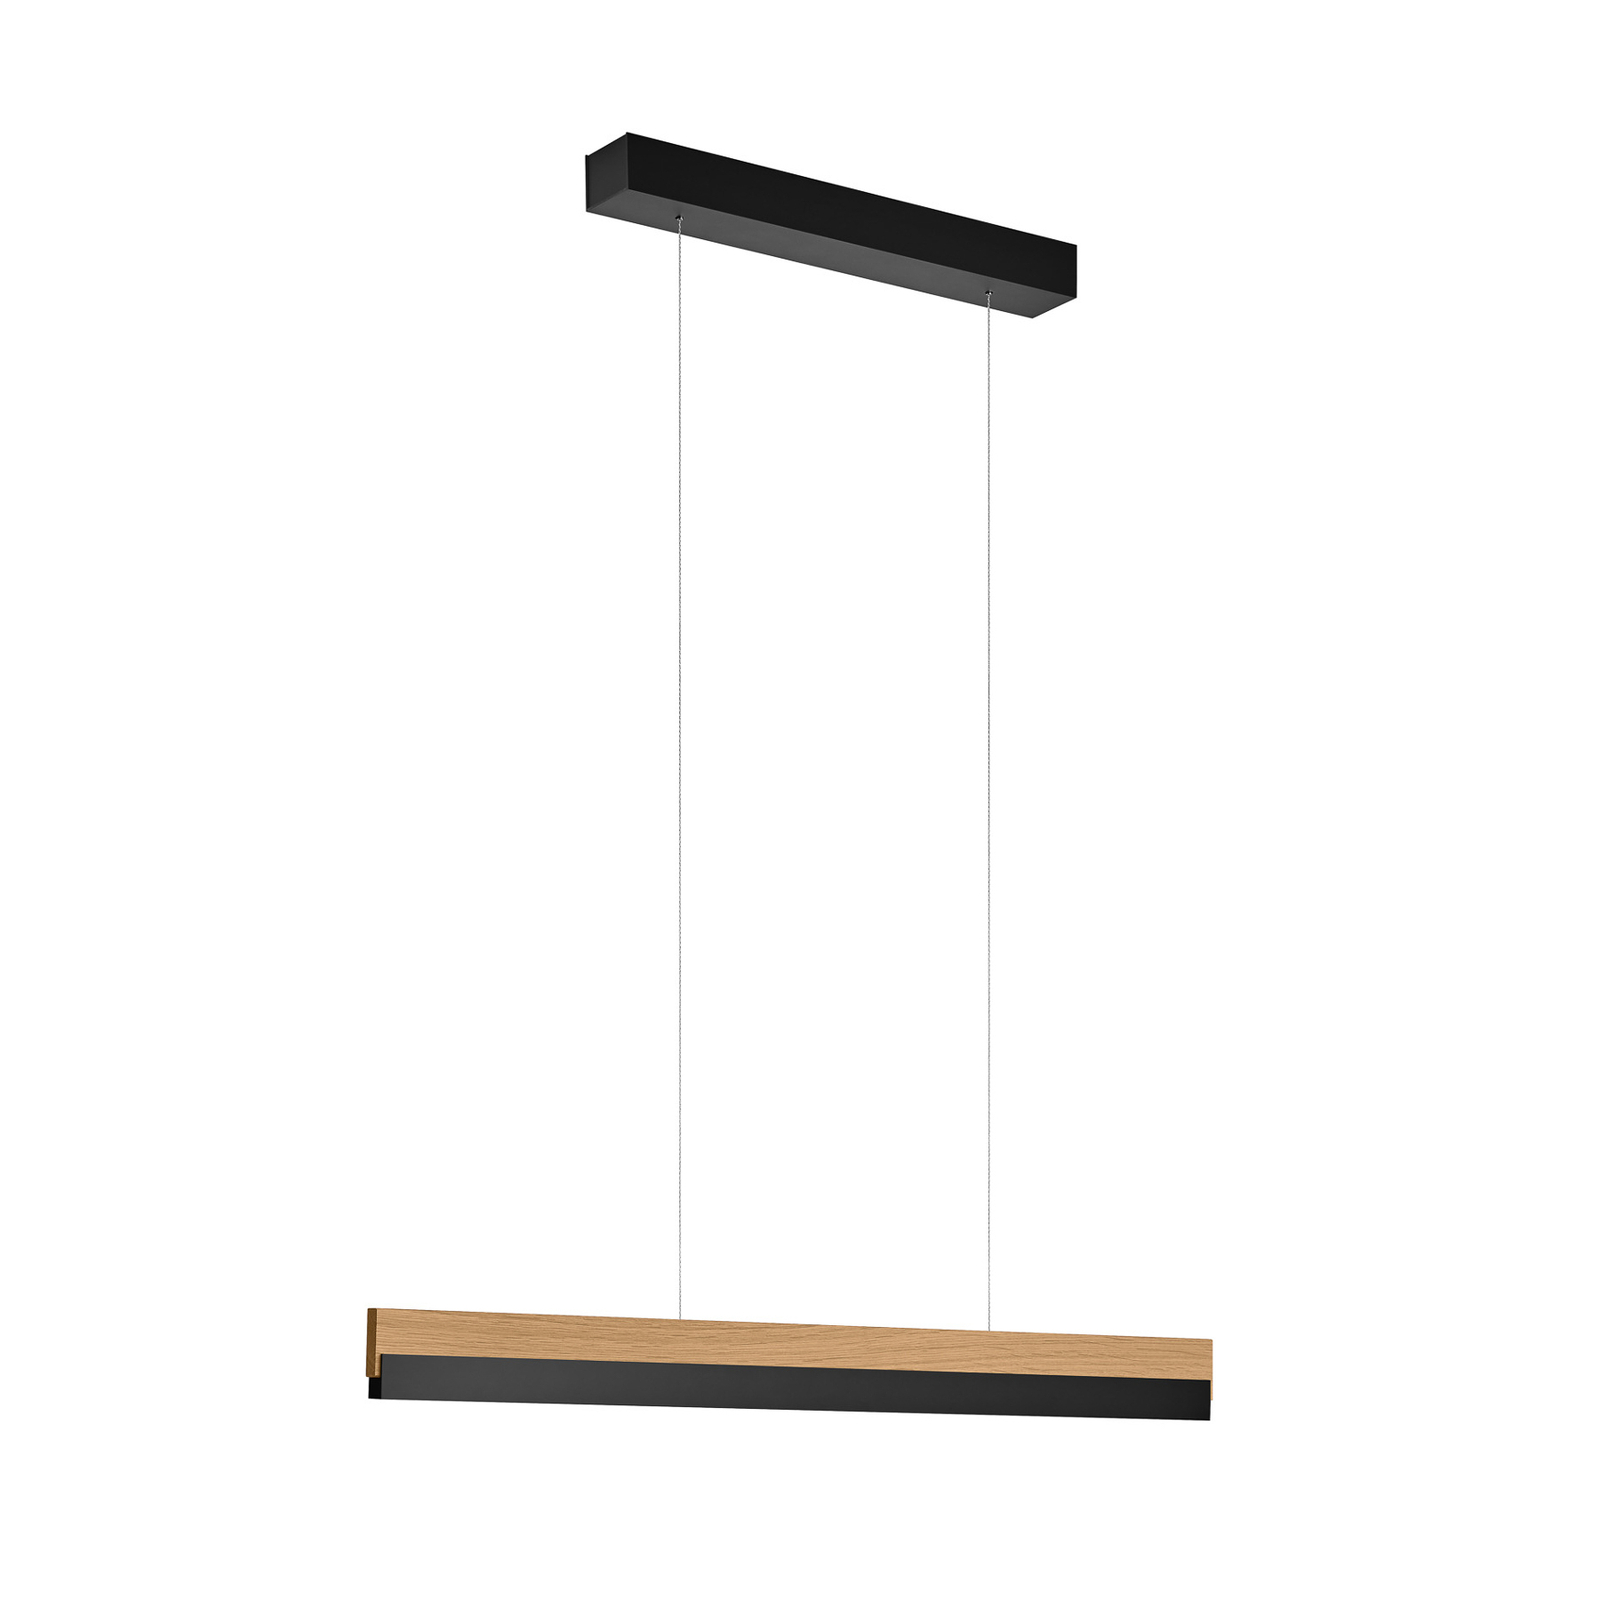 Quitani hanglamp Keijo, zwart/eiken, 98cm